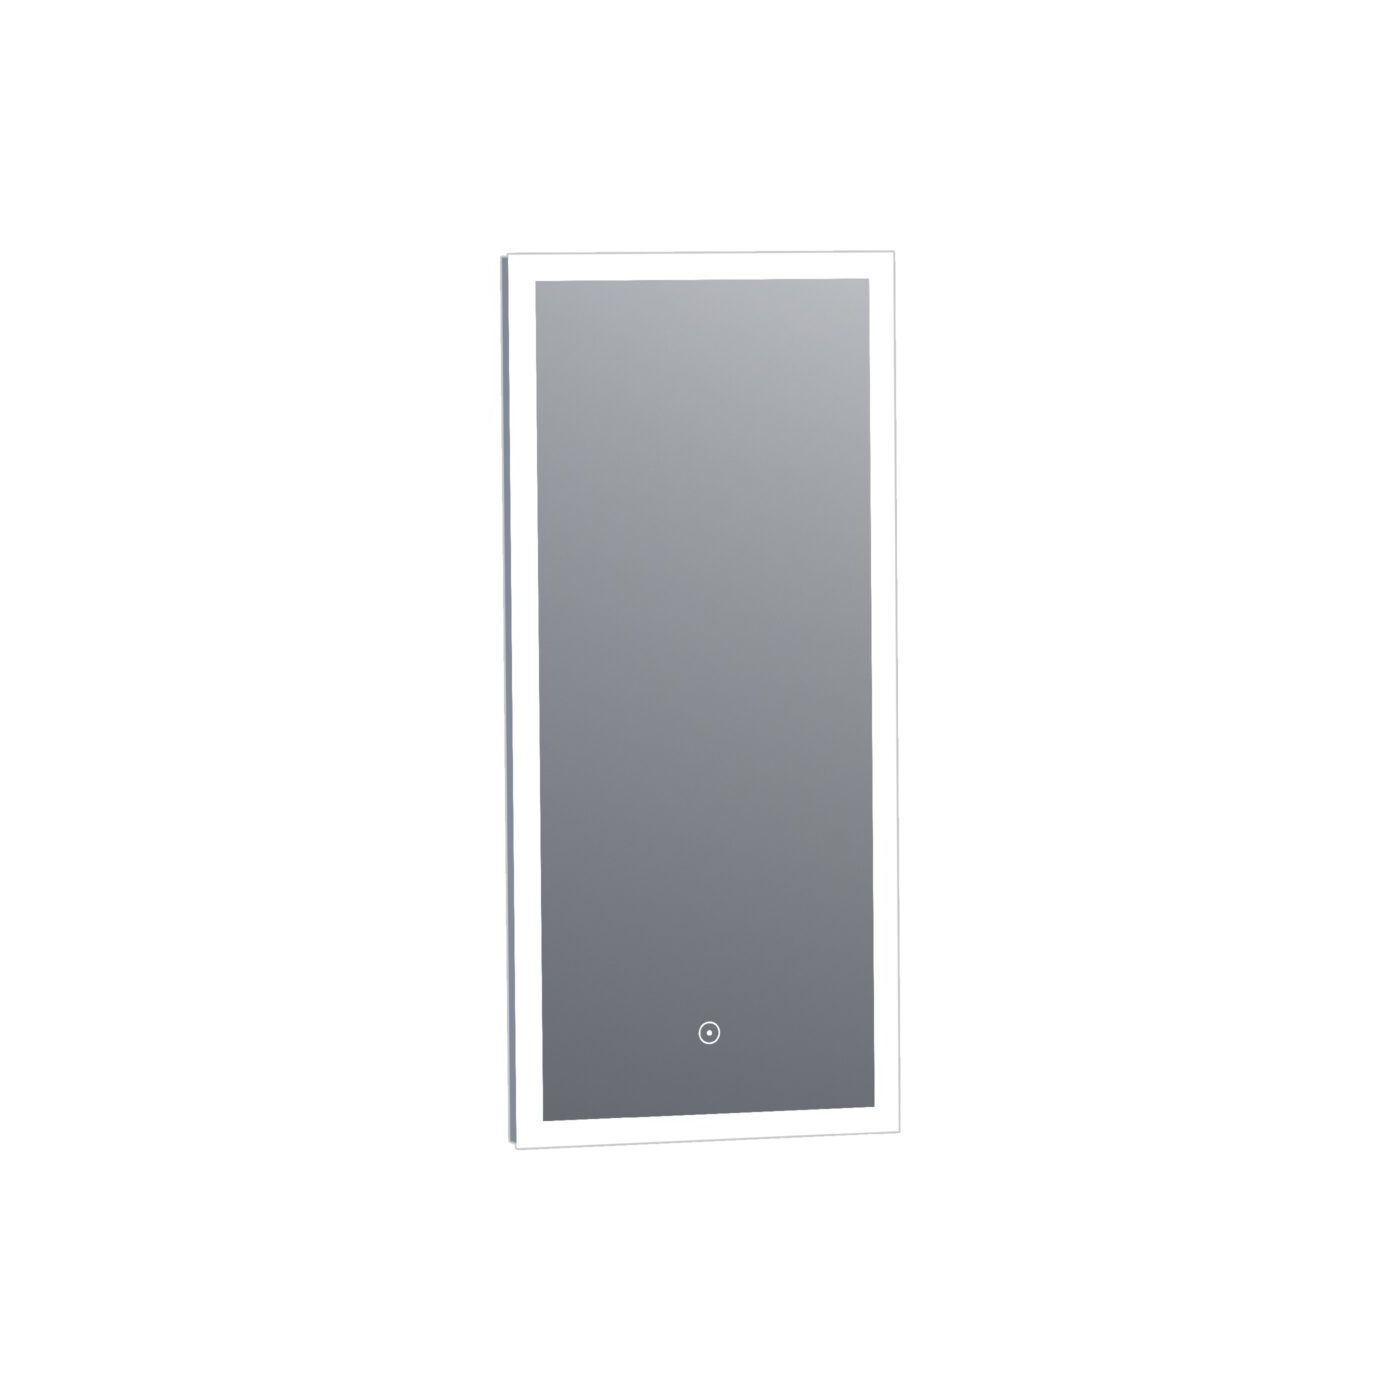 Tapo Edge spiegel 60x70 mat chroom